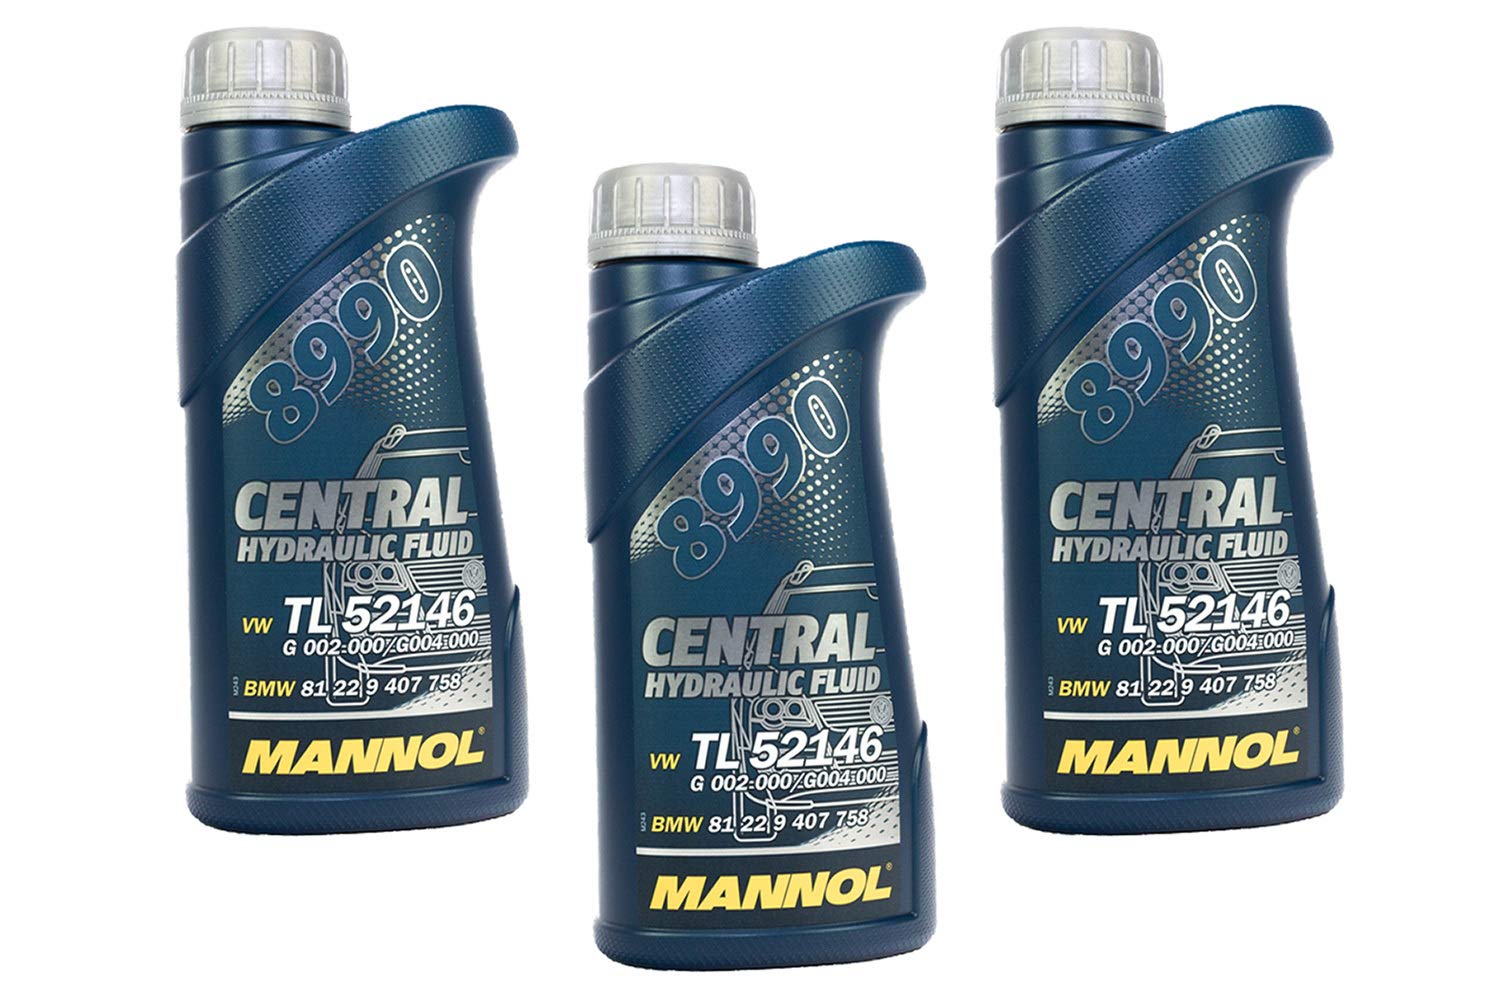 MANNOL Central Hydraulic Fluid Servo Öl Hydrauliköl 3 Stück á 500 ml von MANNOL